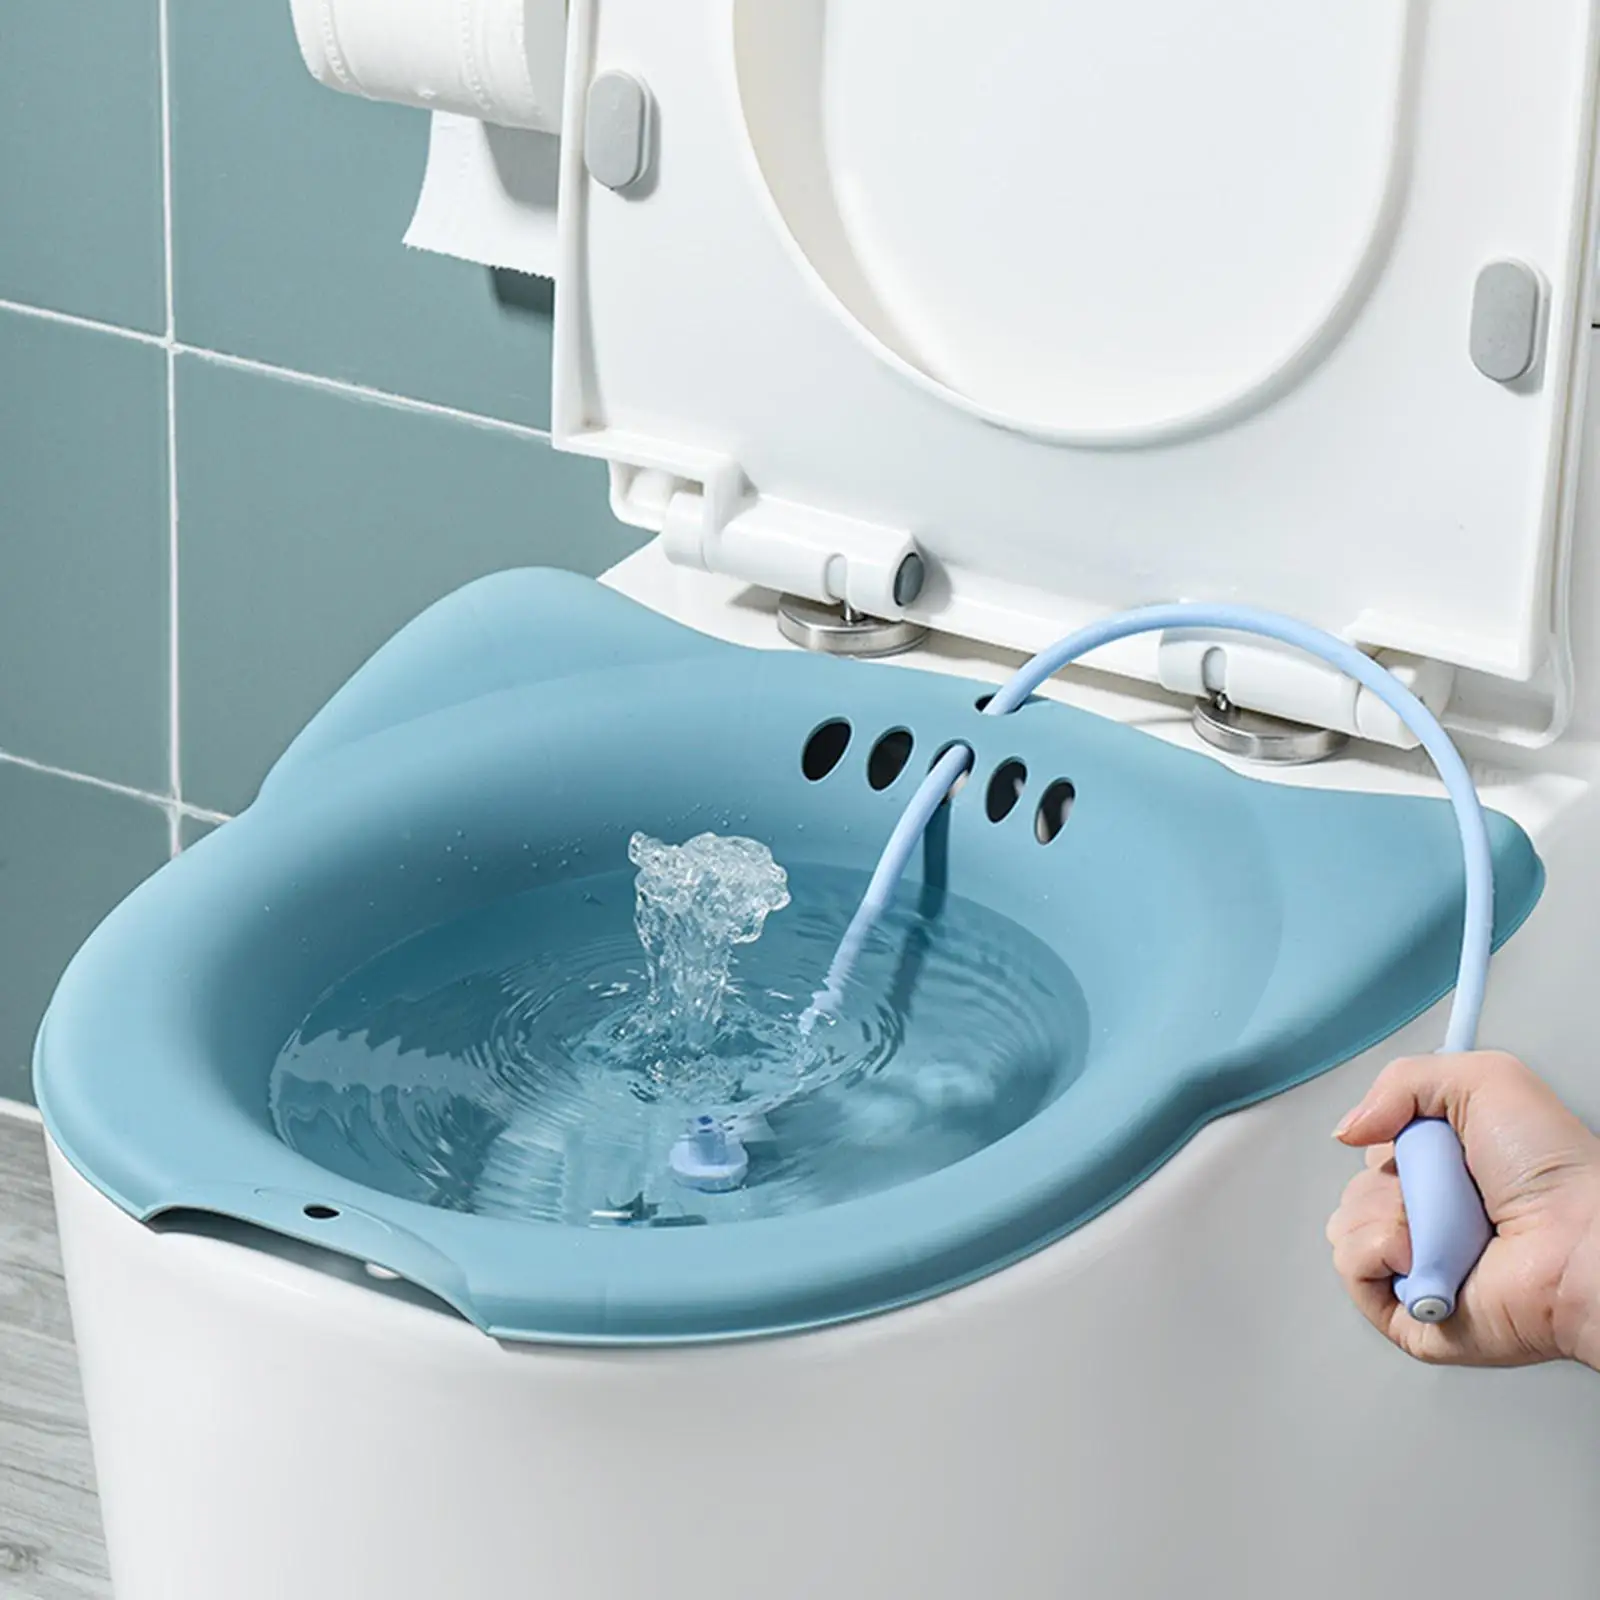 Sitz Bath Toilet Basin for Perineal Soaking Women Elderly